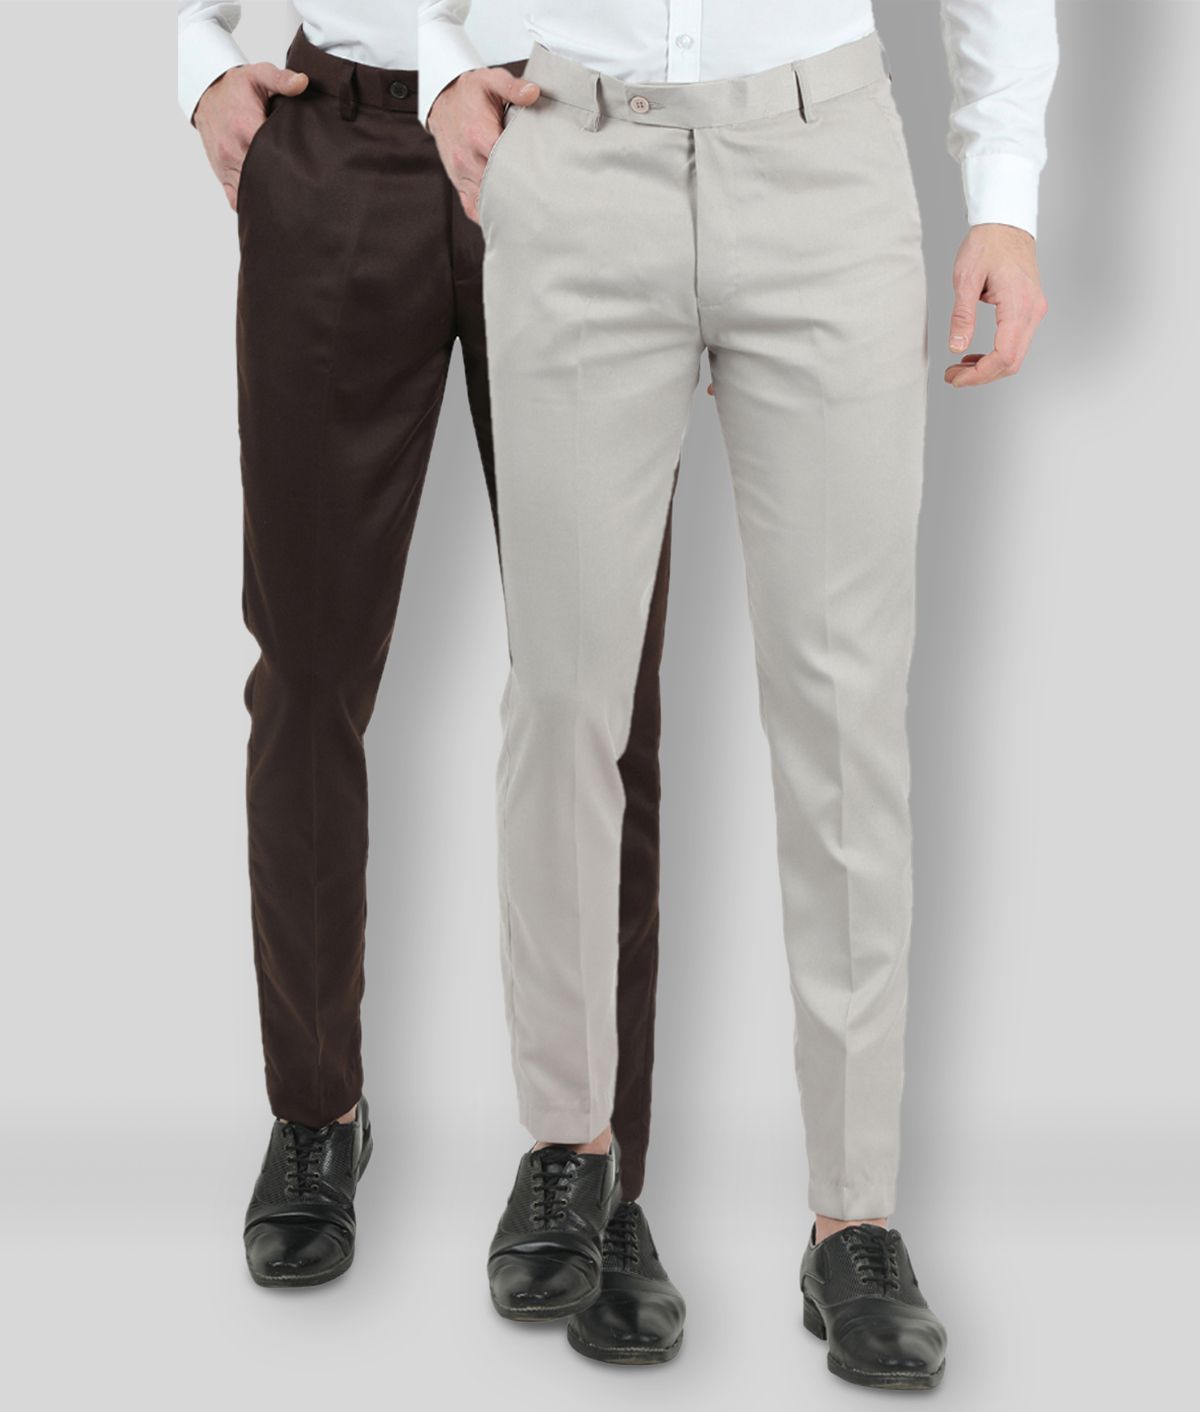     			VEI SASTRE - Multicolored Polycotton Slim - Fit Men's Formal Pants ( Pack of 2 )